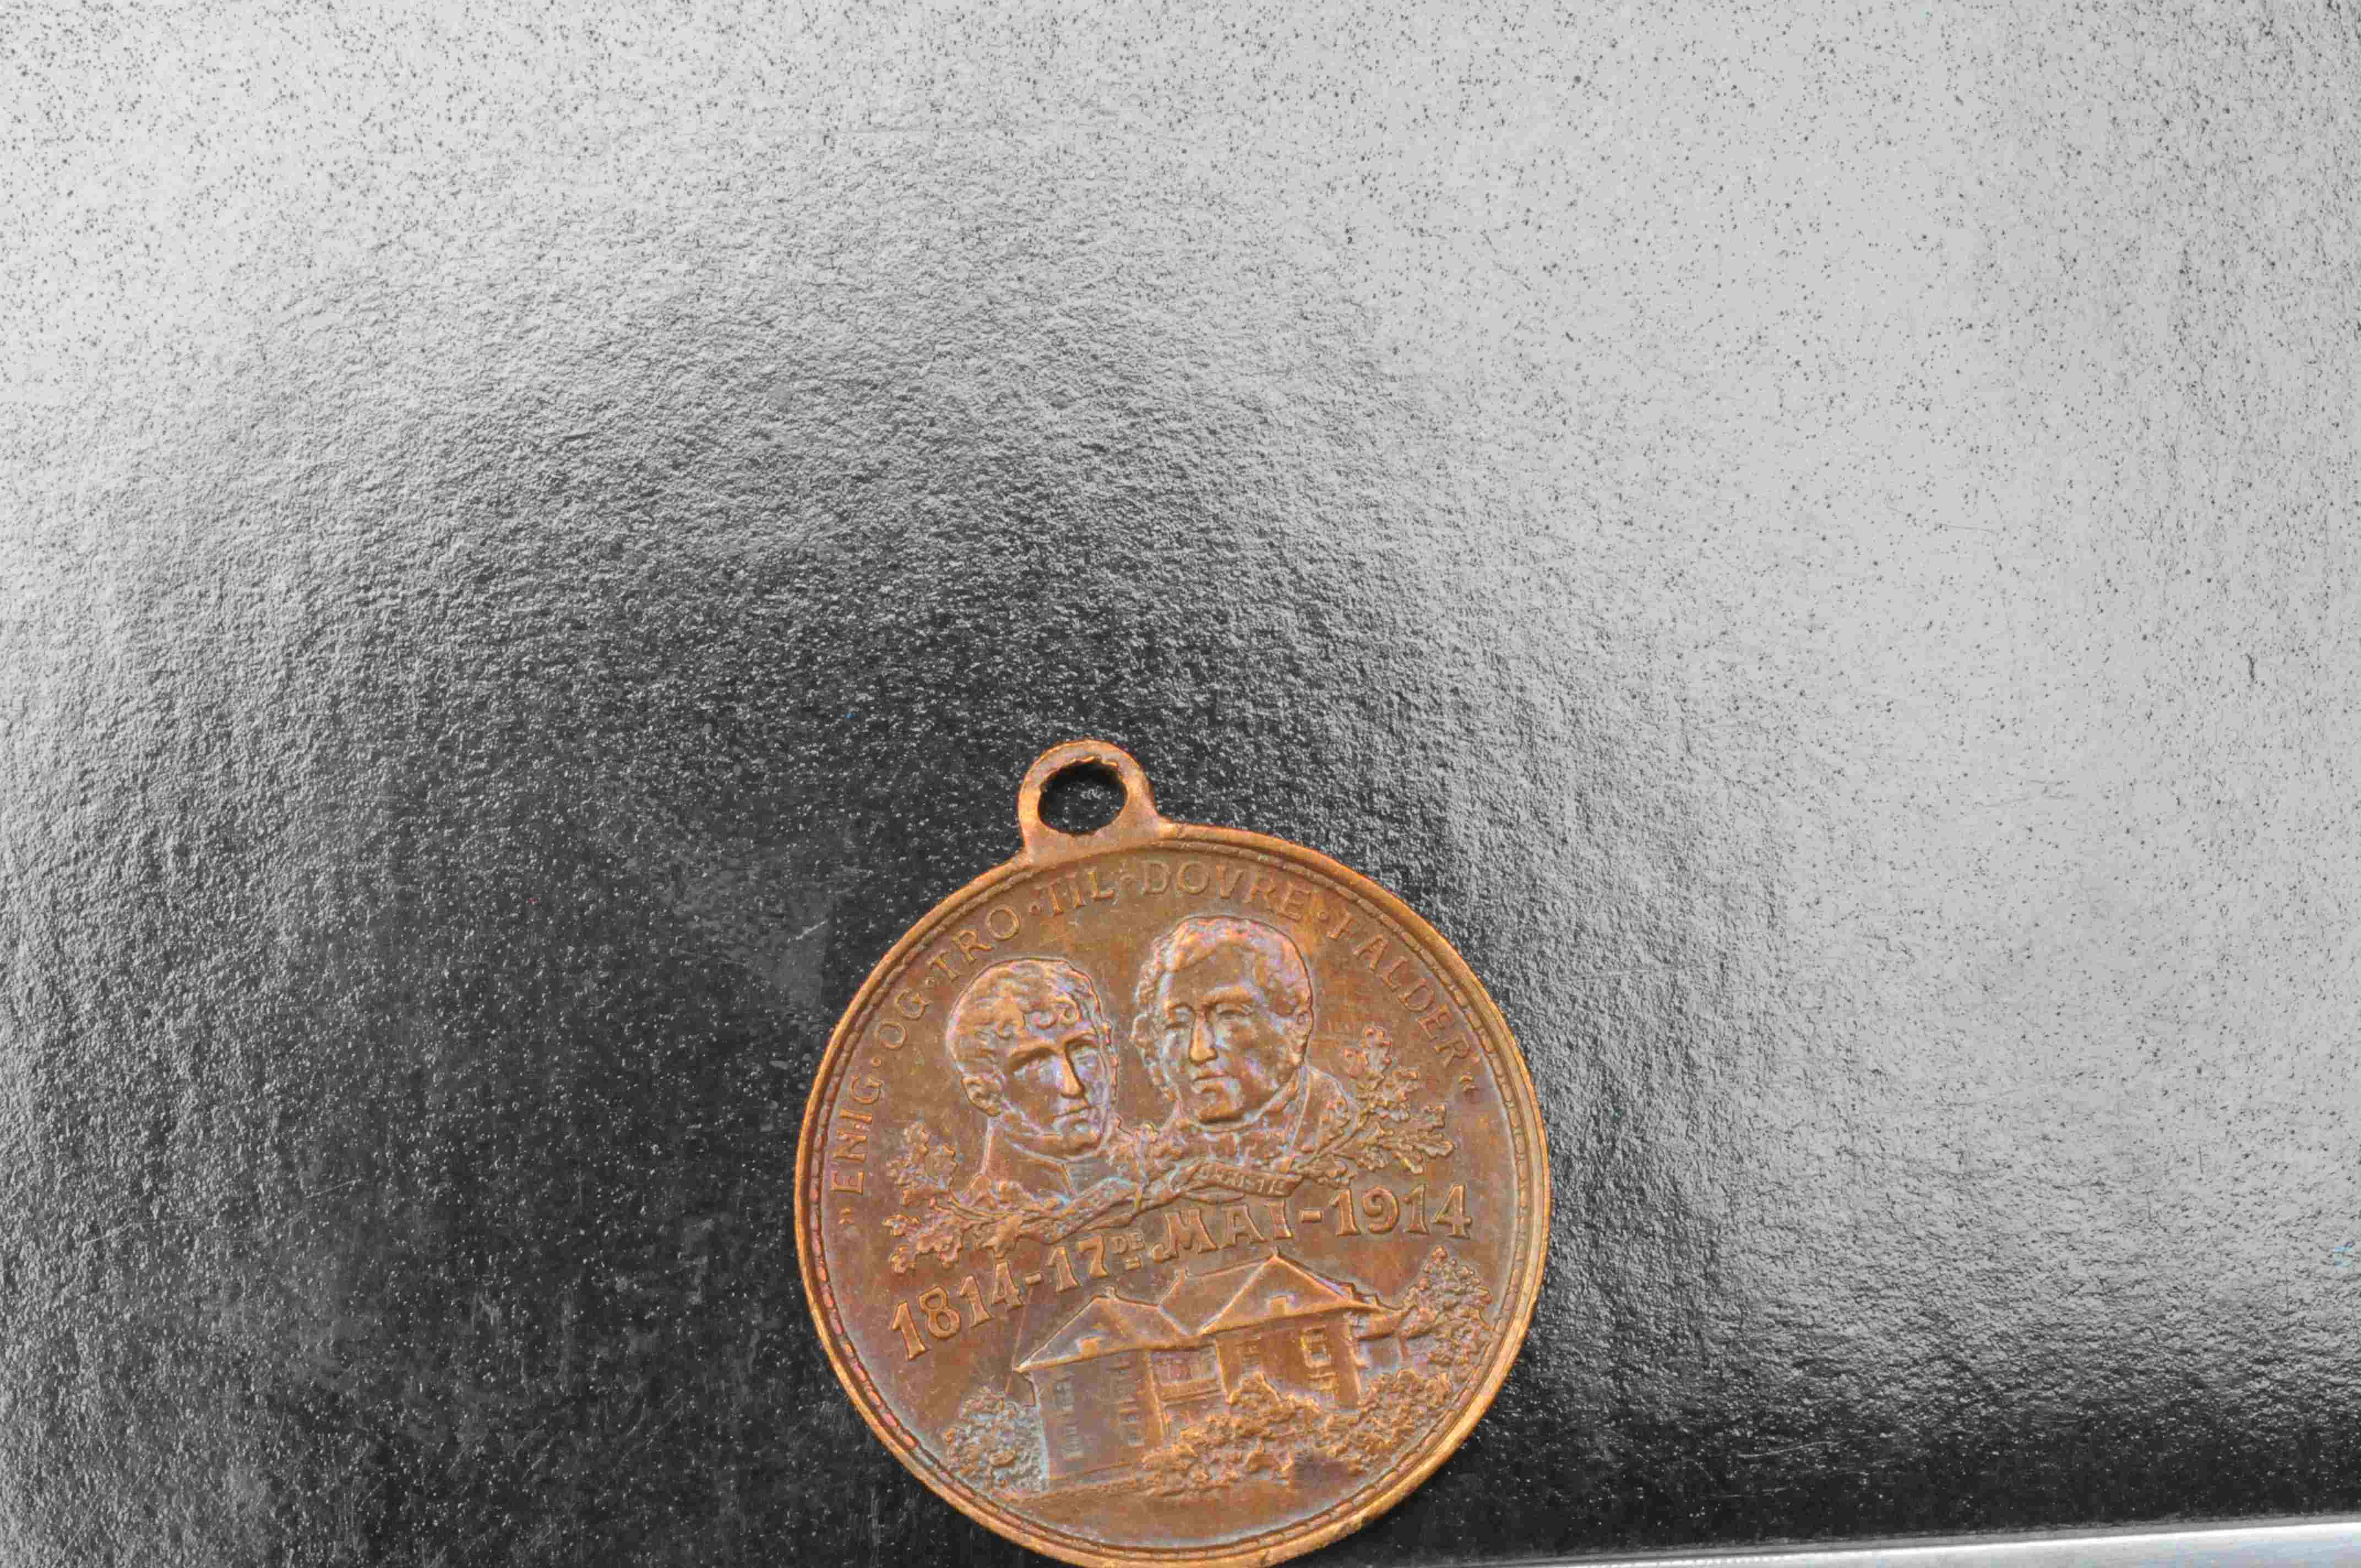 17 mai medalje Wisconsin bronse